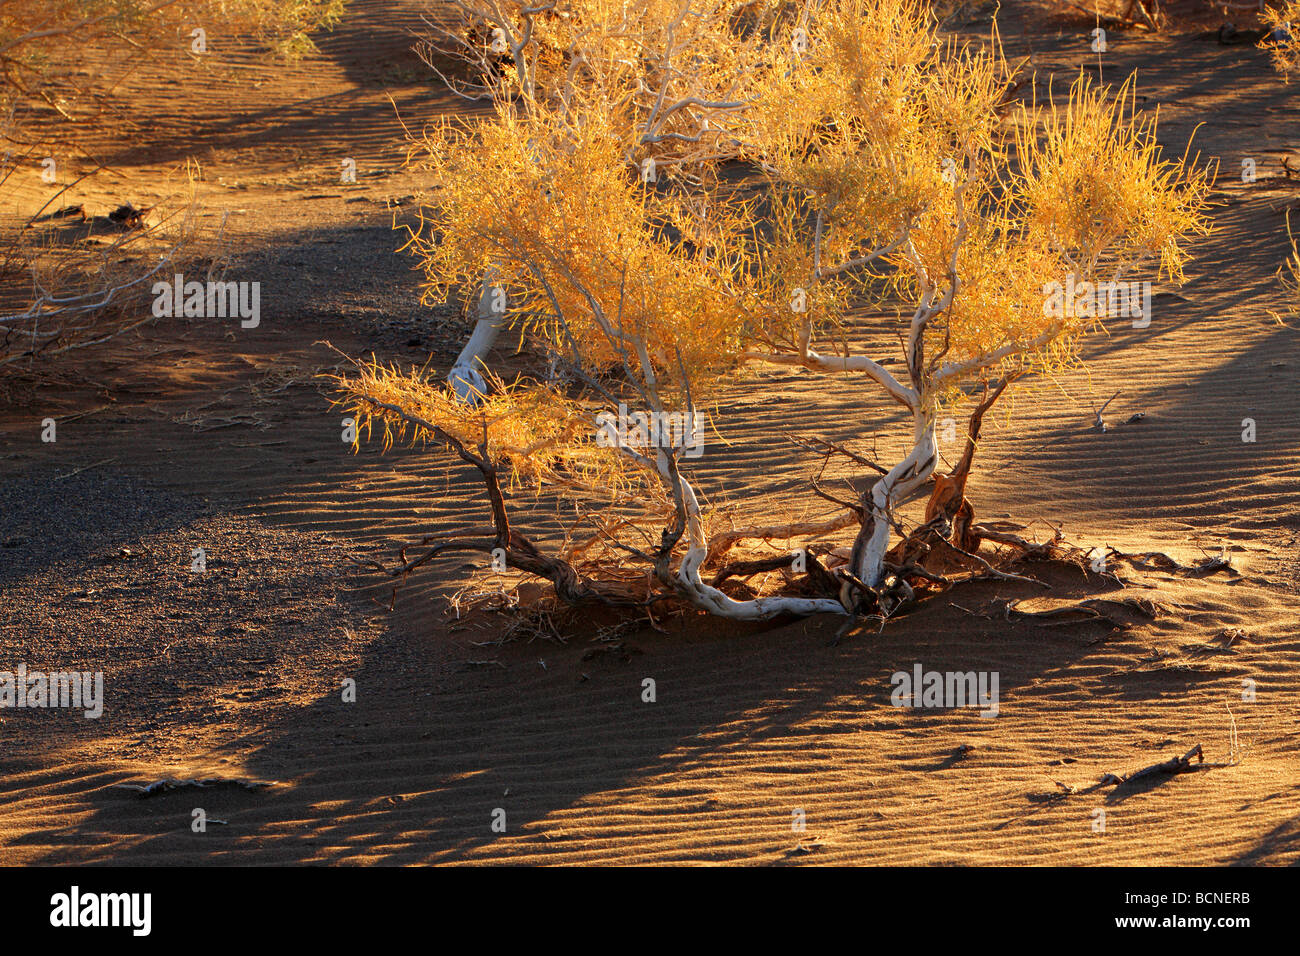 Desert in Mori Kazakh Autonomous County, Changji Hui Autonomous Prefecture, Xinjiang Uyghur Autonomous Region, China Stock Photo